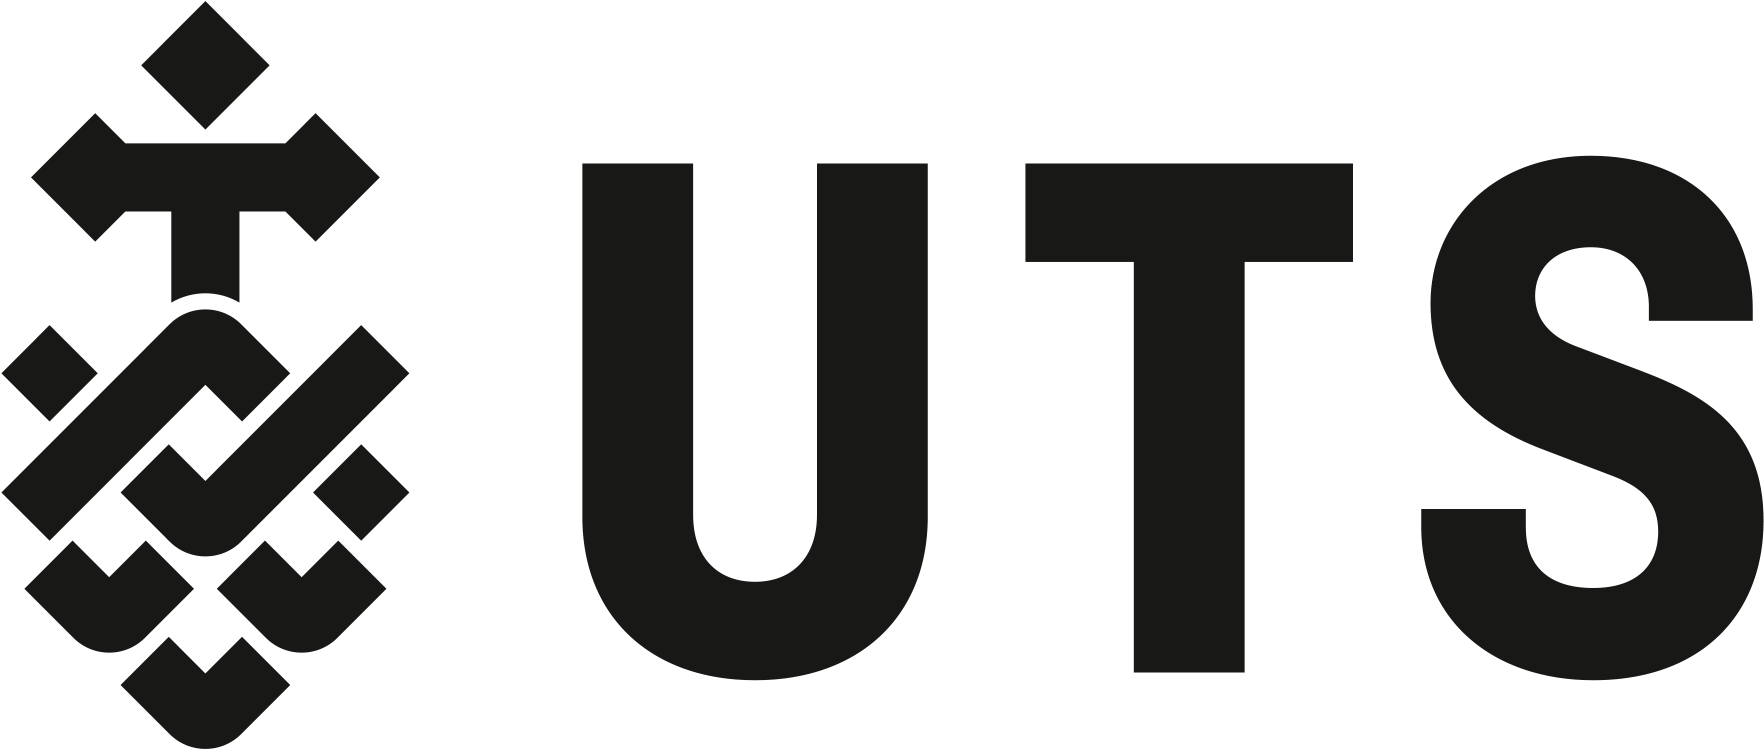 Image Result For Uts, Australia Logo - University Of Technology Sydney Logo (2205x952)